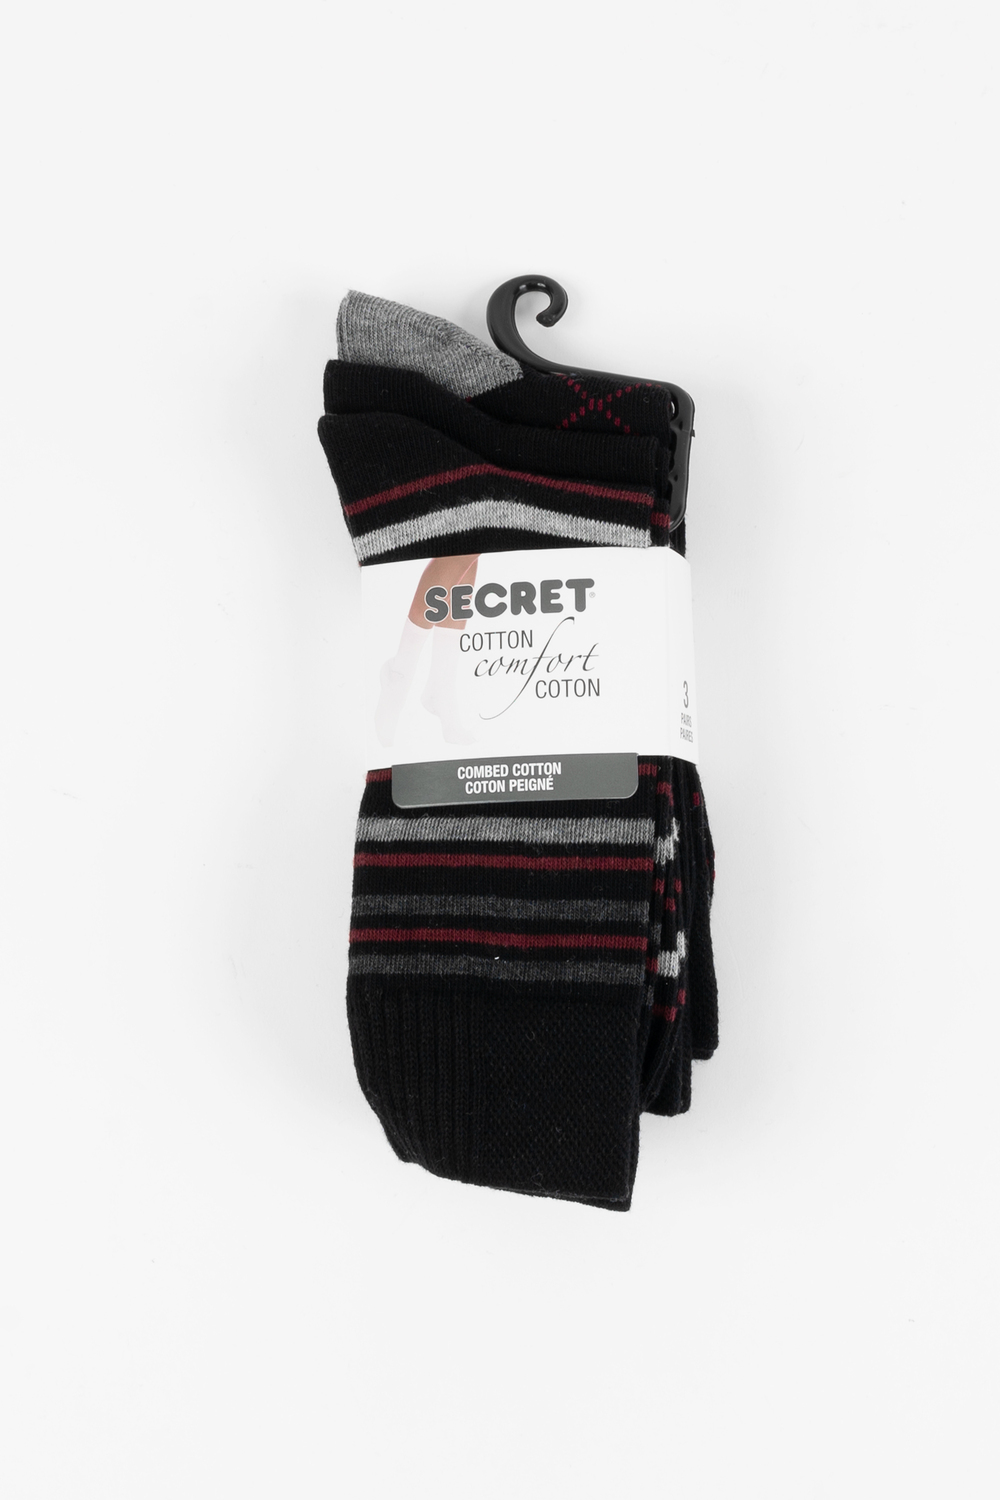 Secret - Combed cotton dress socks, 3 pairs